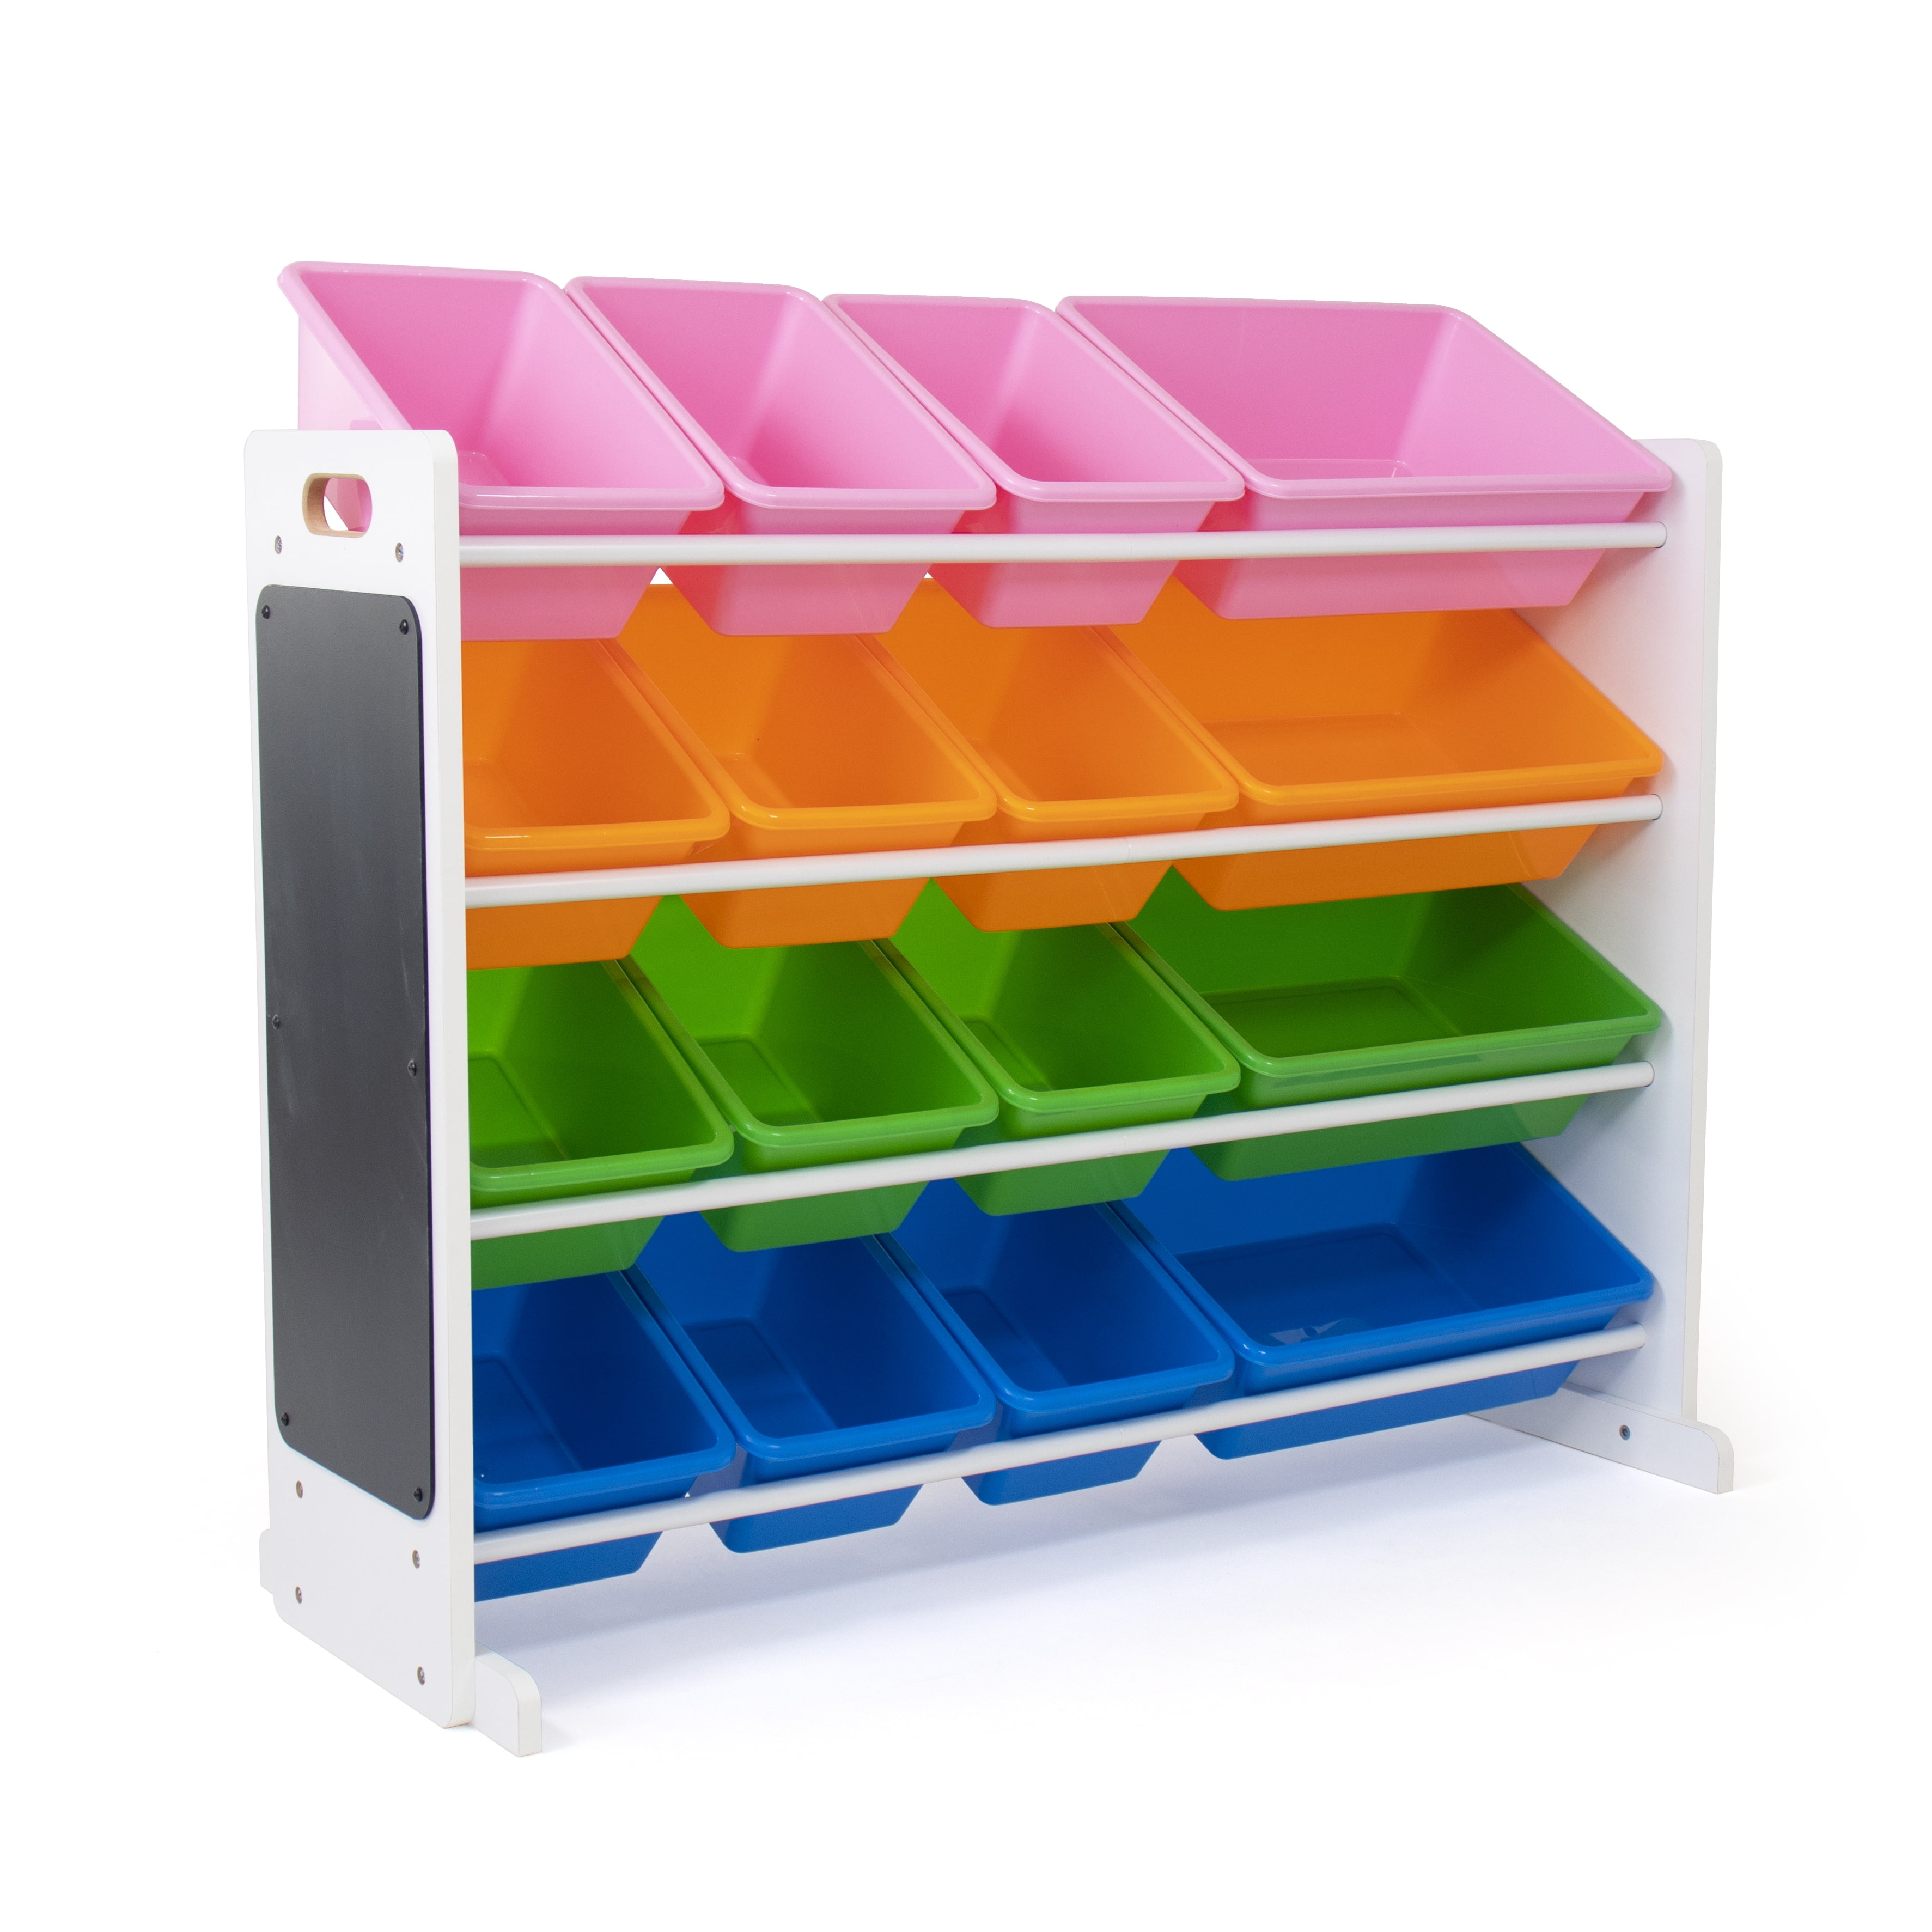 KIDS STORAGE BOOKSHELF Toy Bin Organizer Bookcase Open Shelf Multiple Colors 